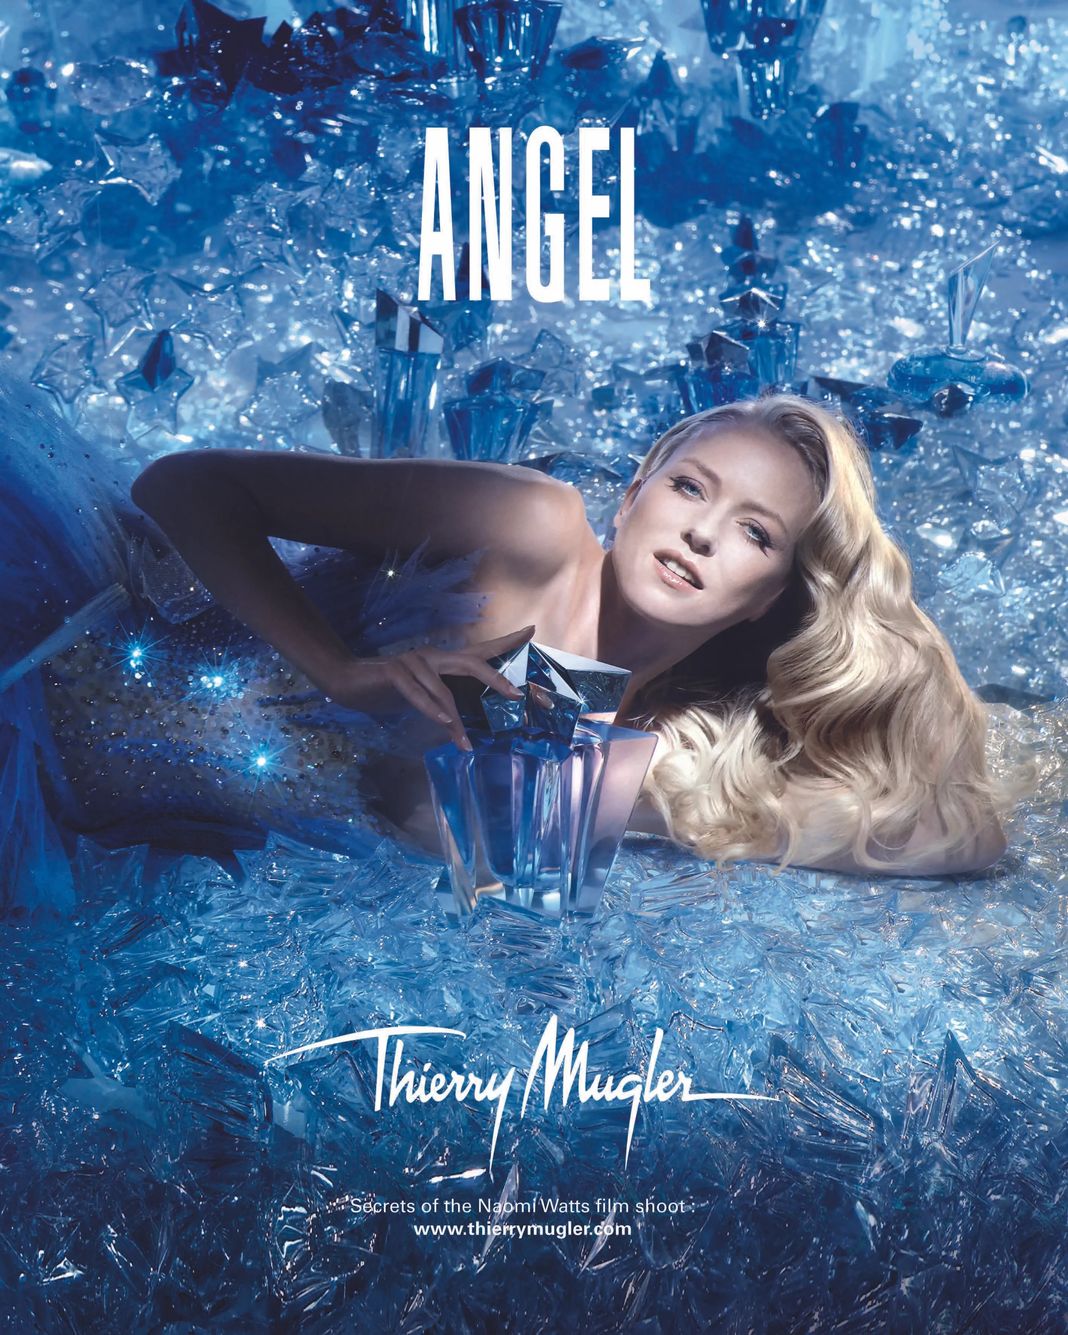 Наоми Уоттс в рекламной кампании аромата Angel Mugler